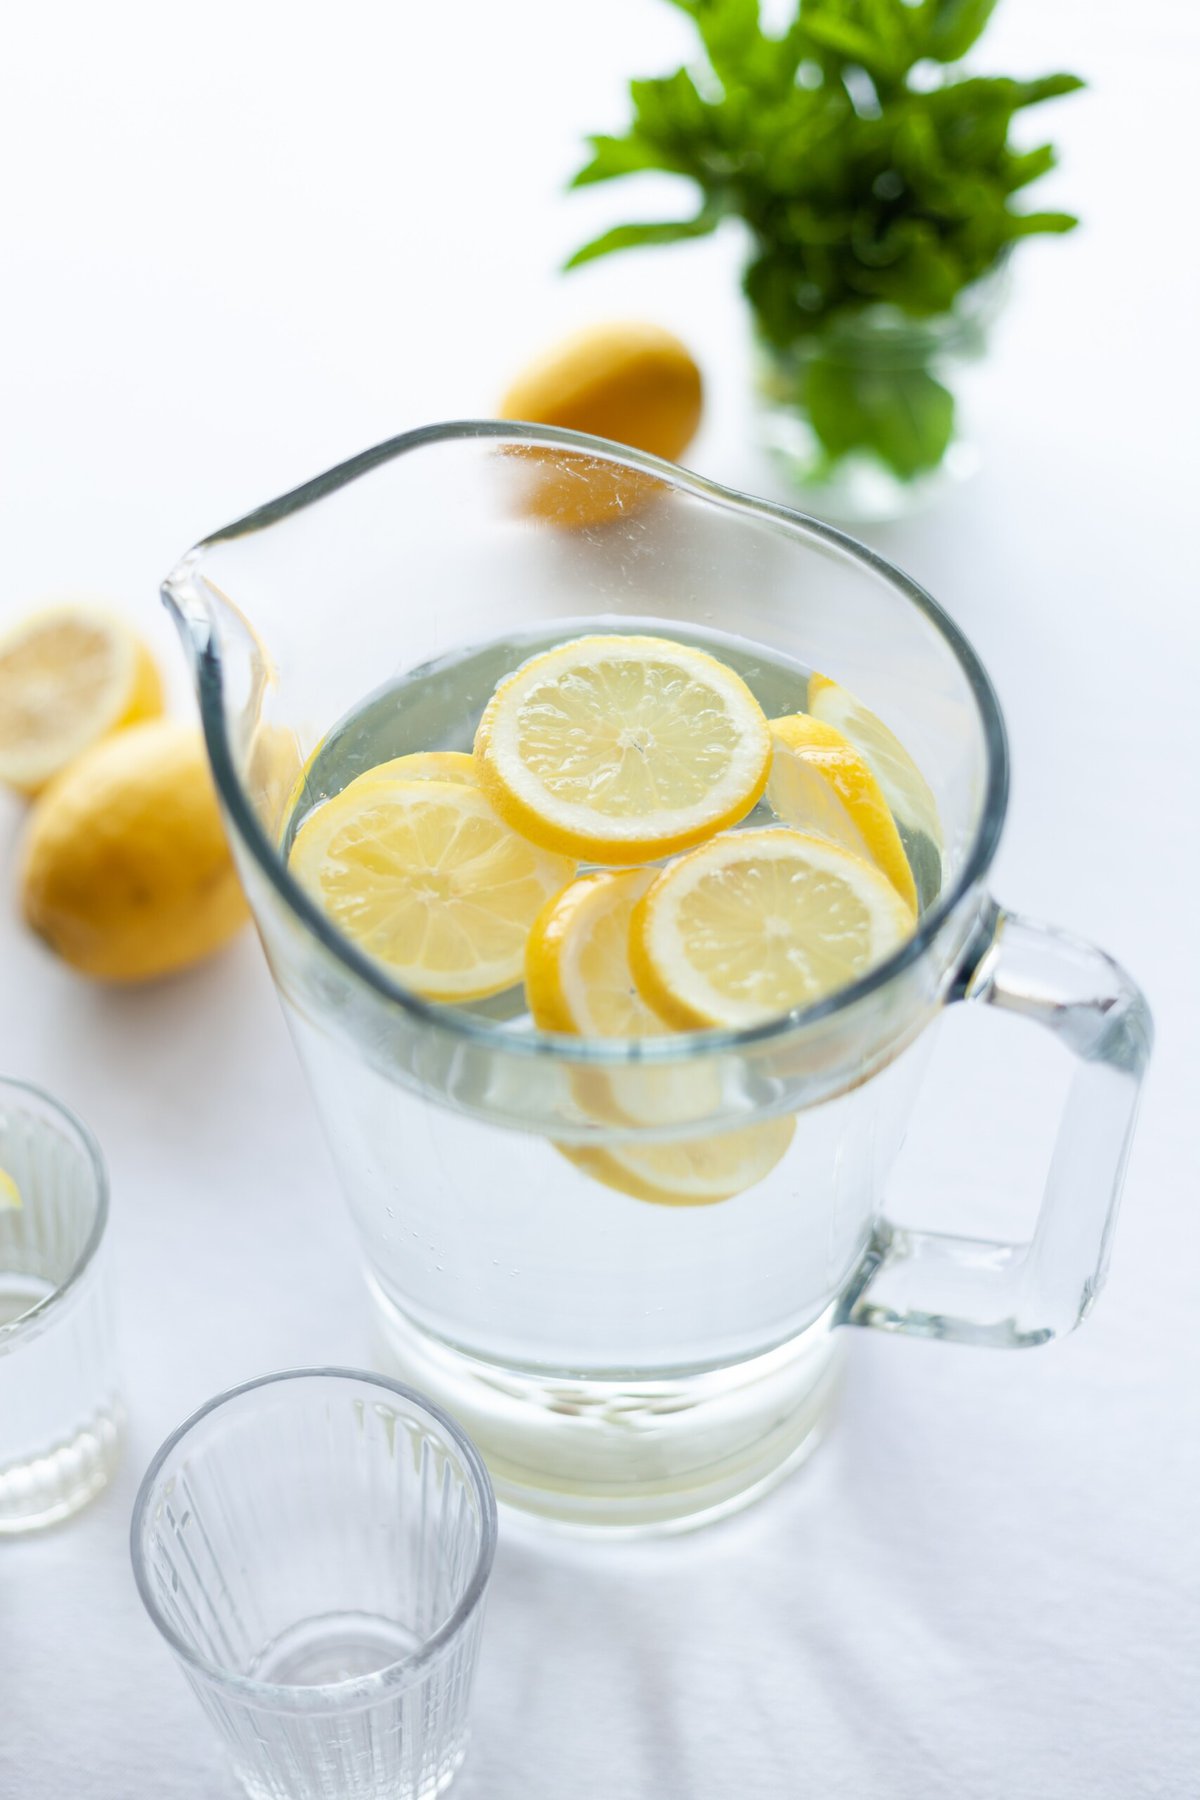 A jug of lemon water